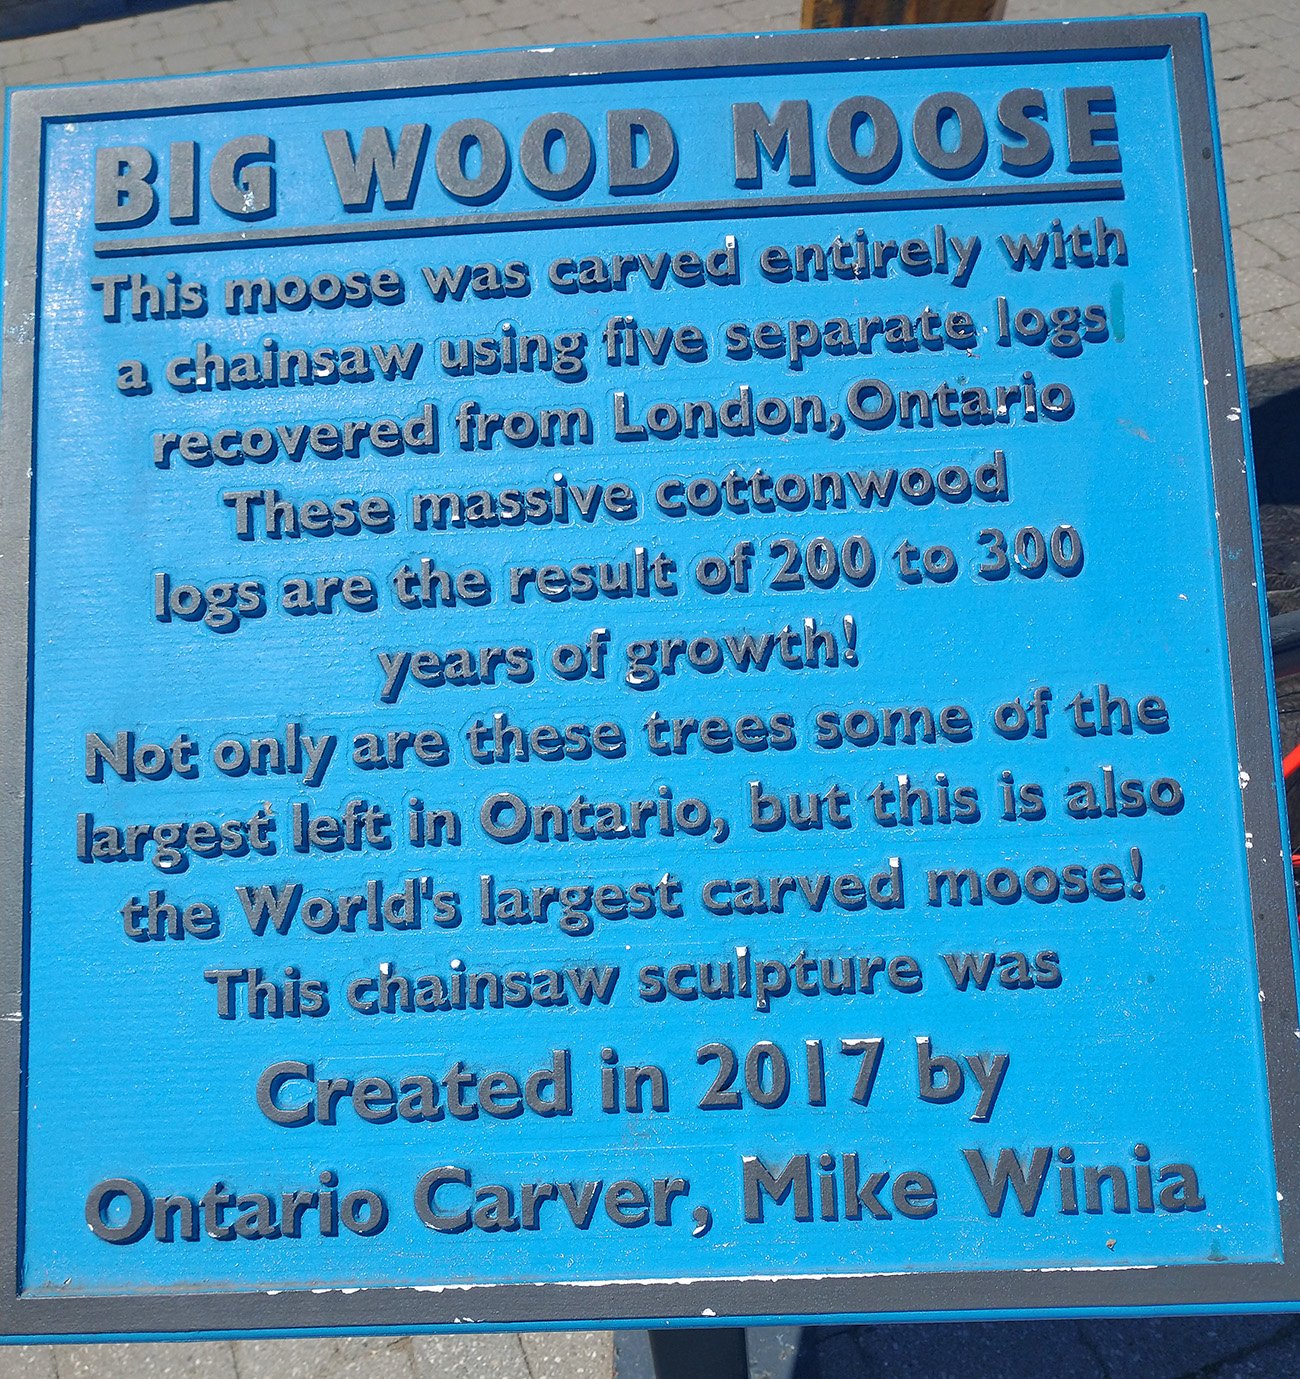 Proof of moose legitimacy.